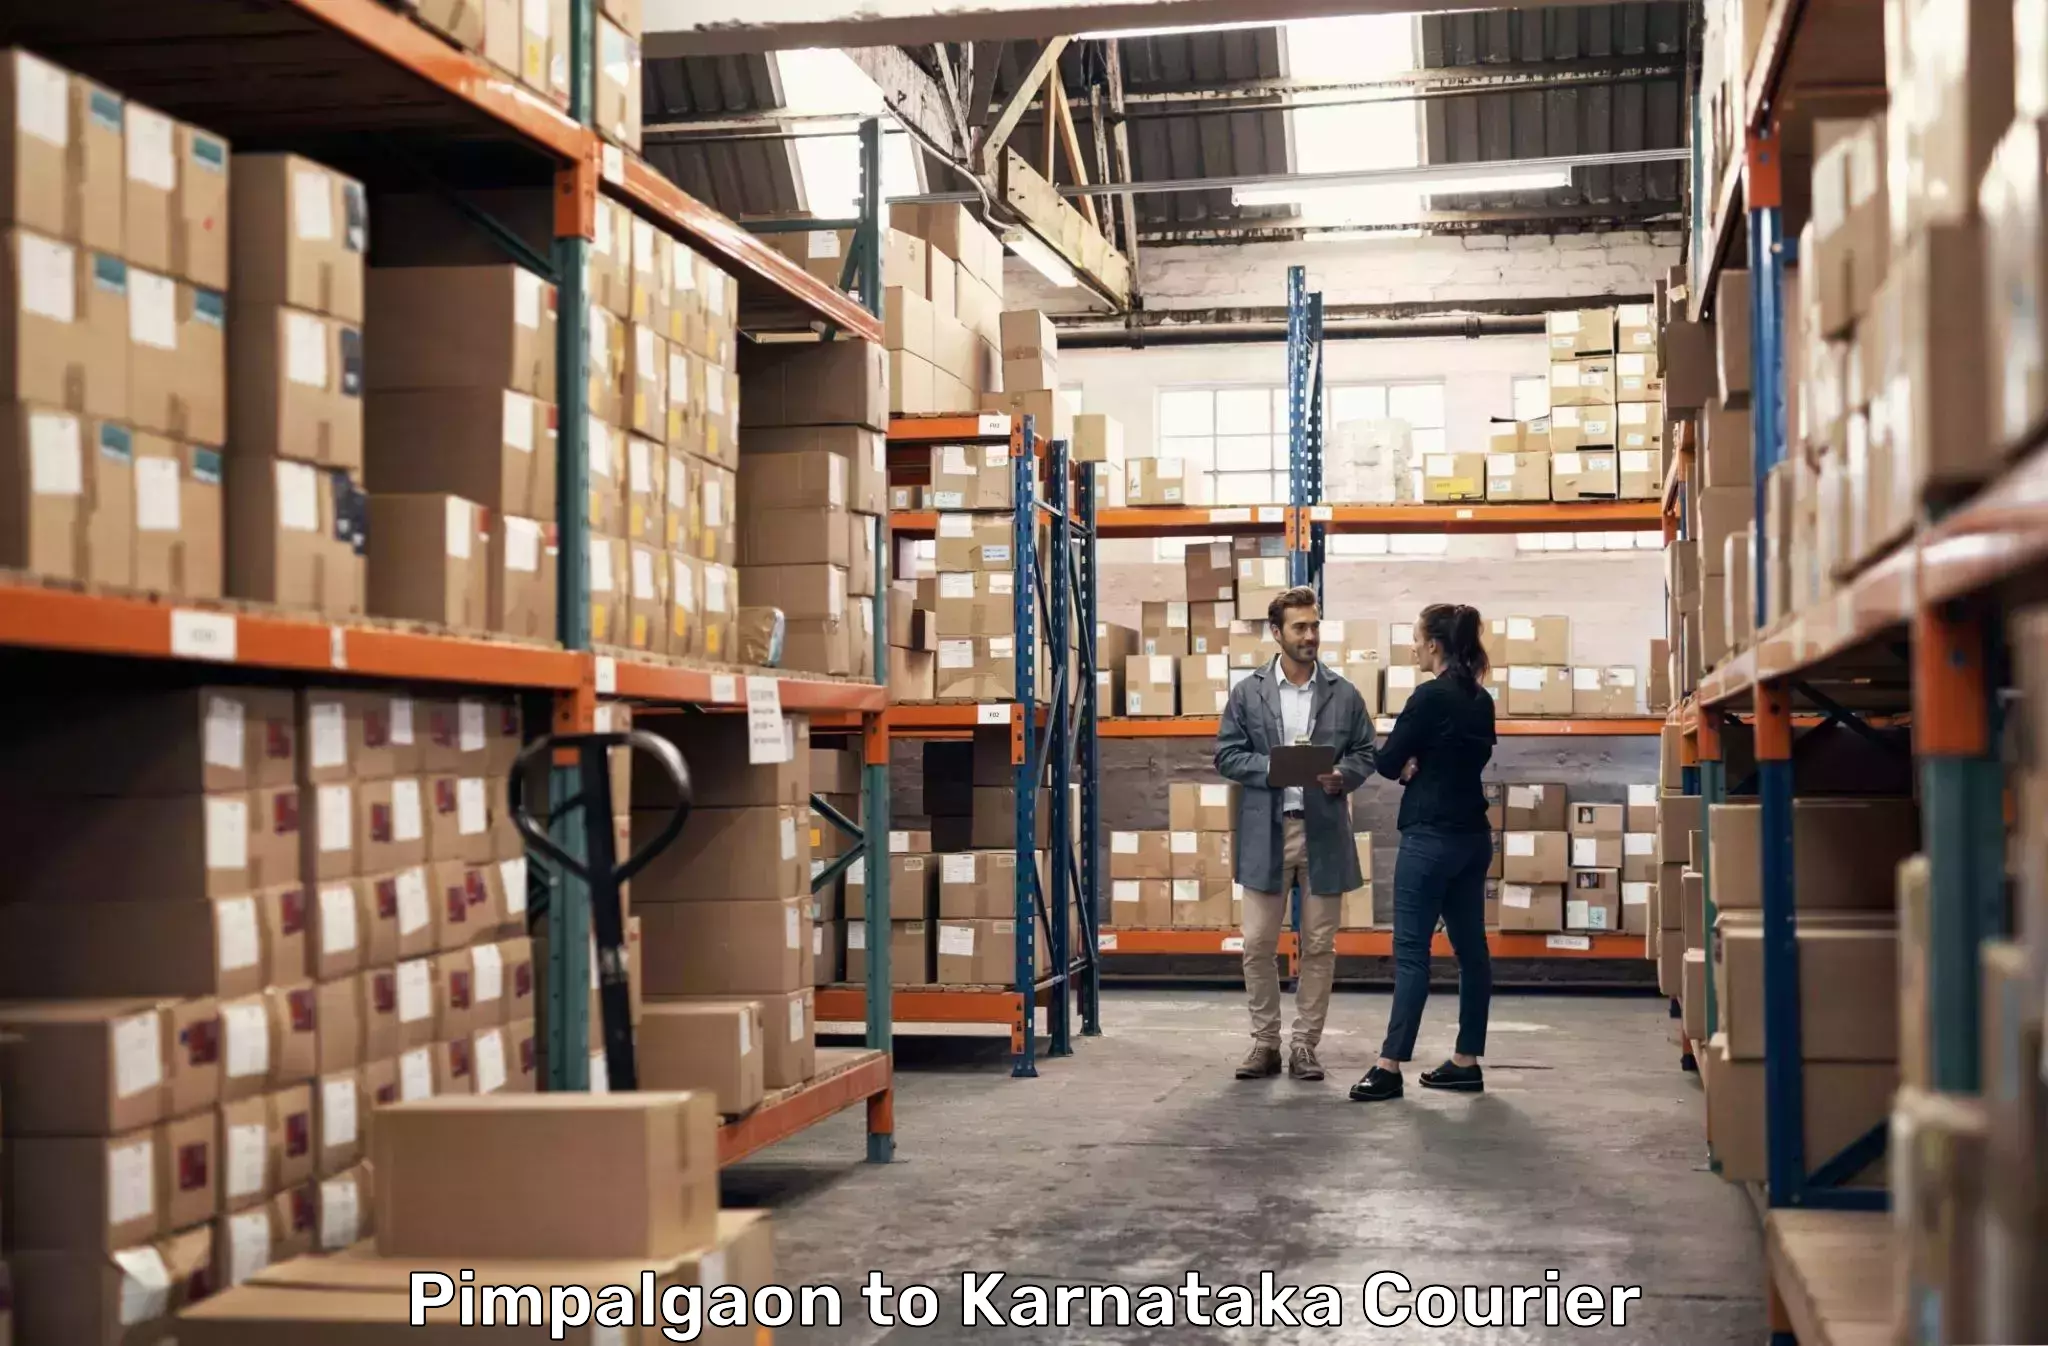 Courier service comparison Pimpalgaon to Bidar